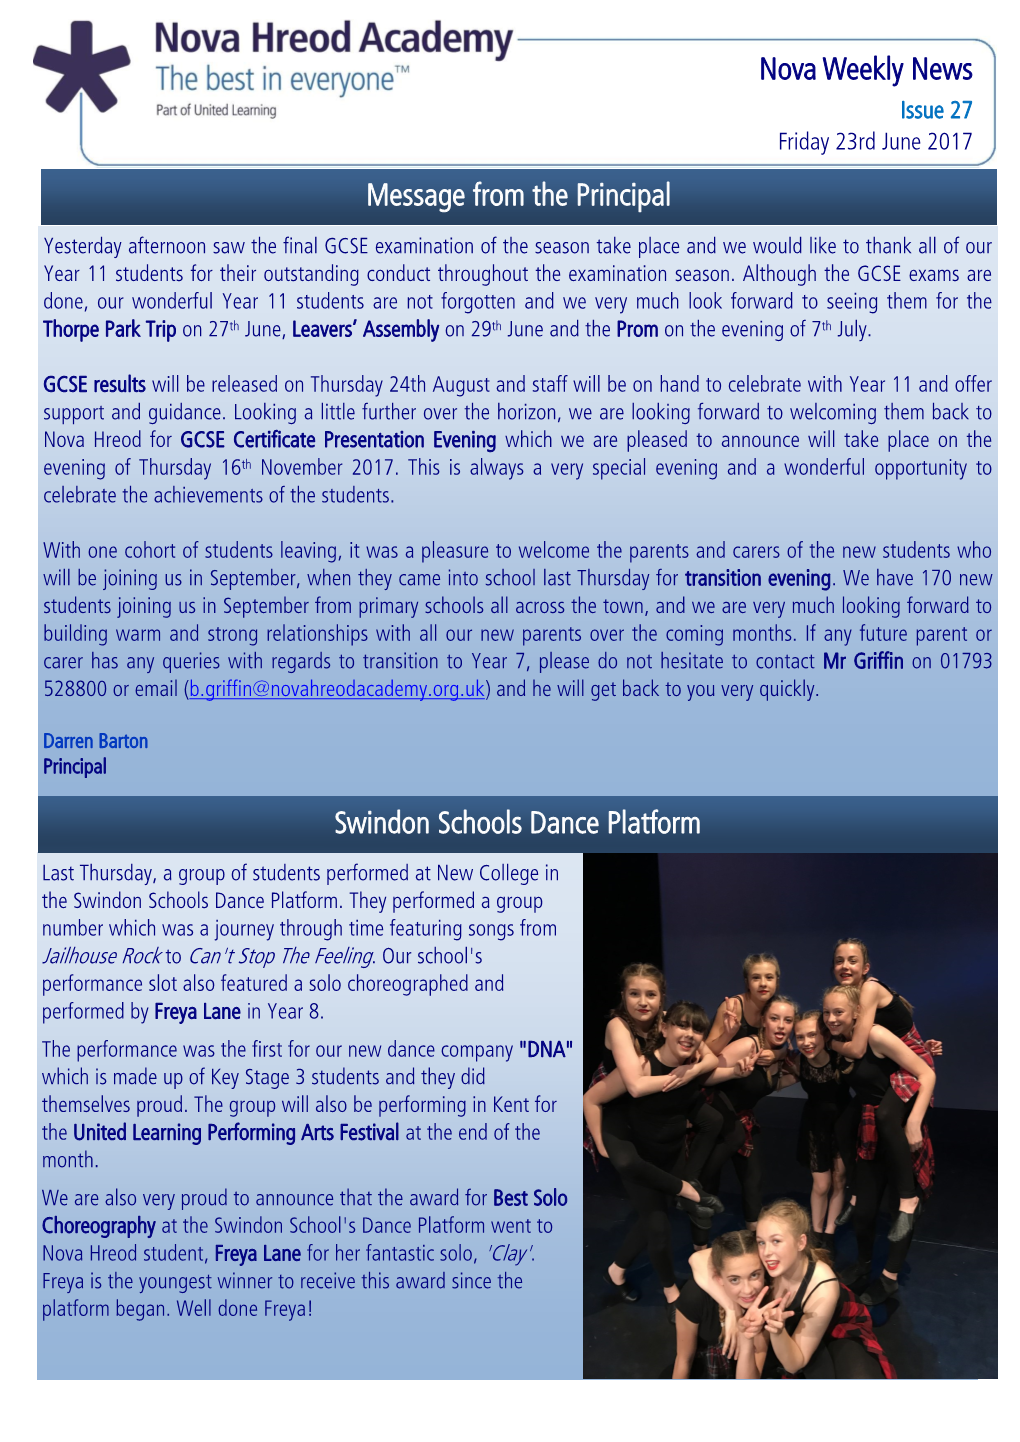 Nova Weekly News Message from the Principal Swindon Schools Dance